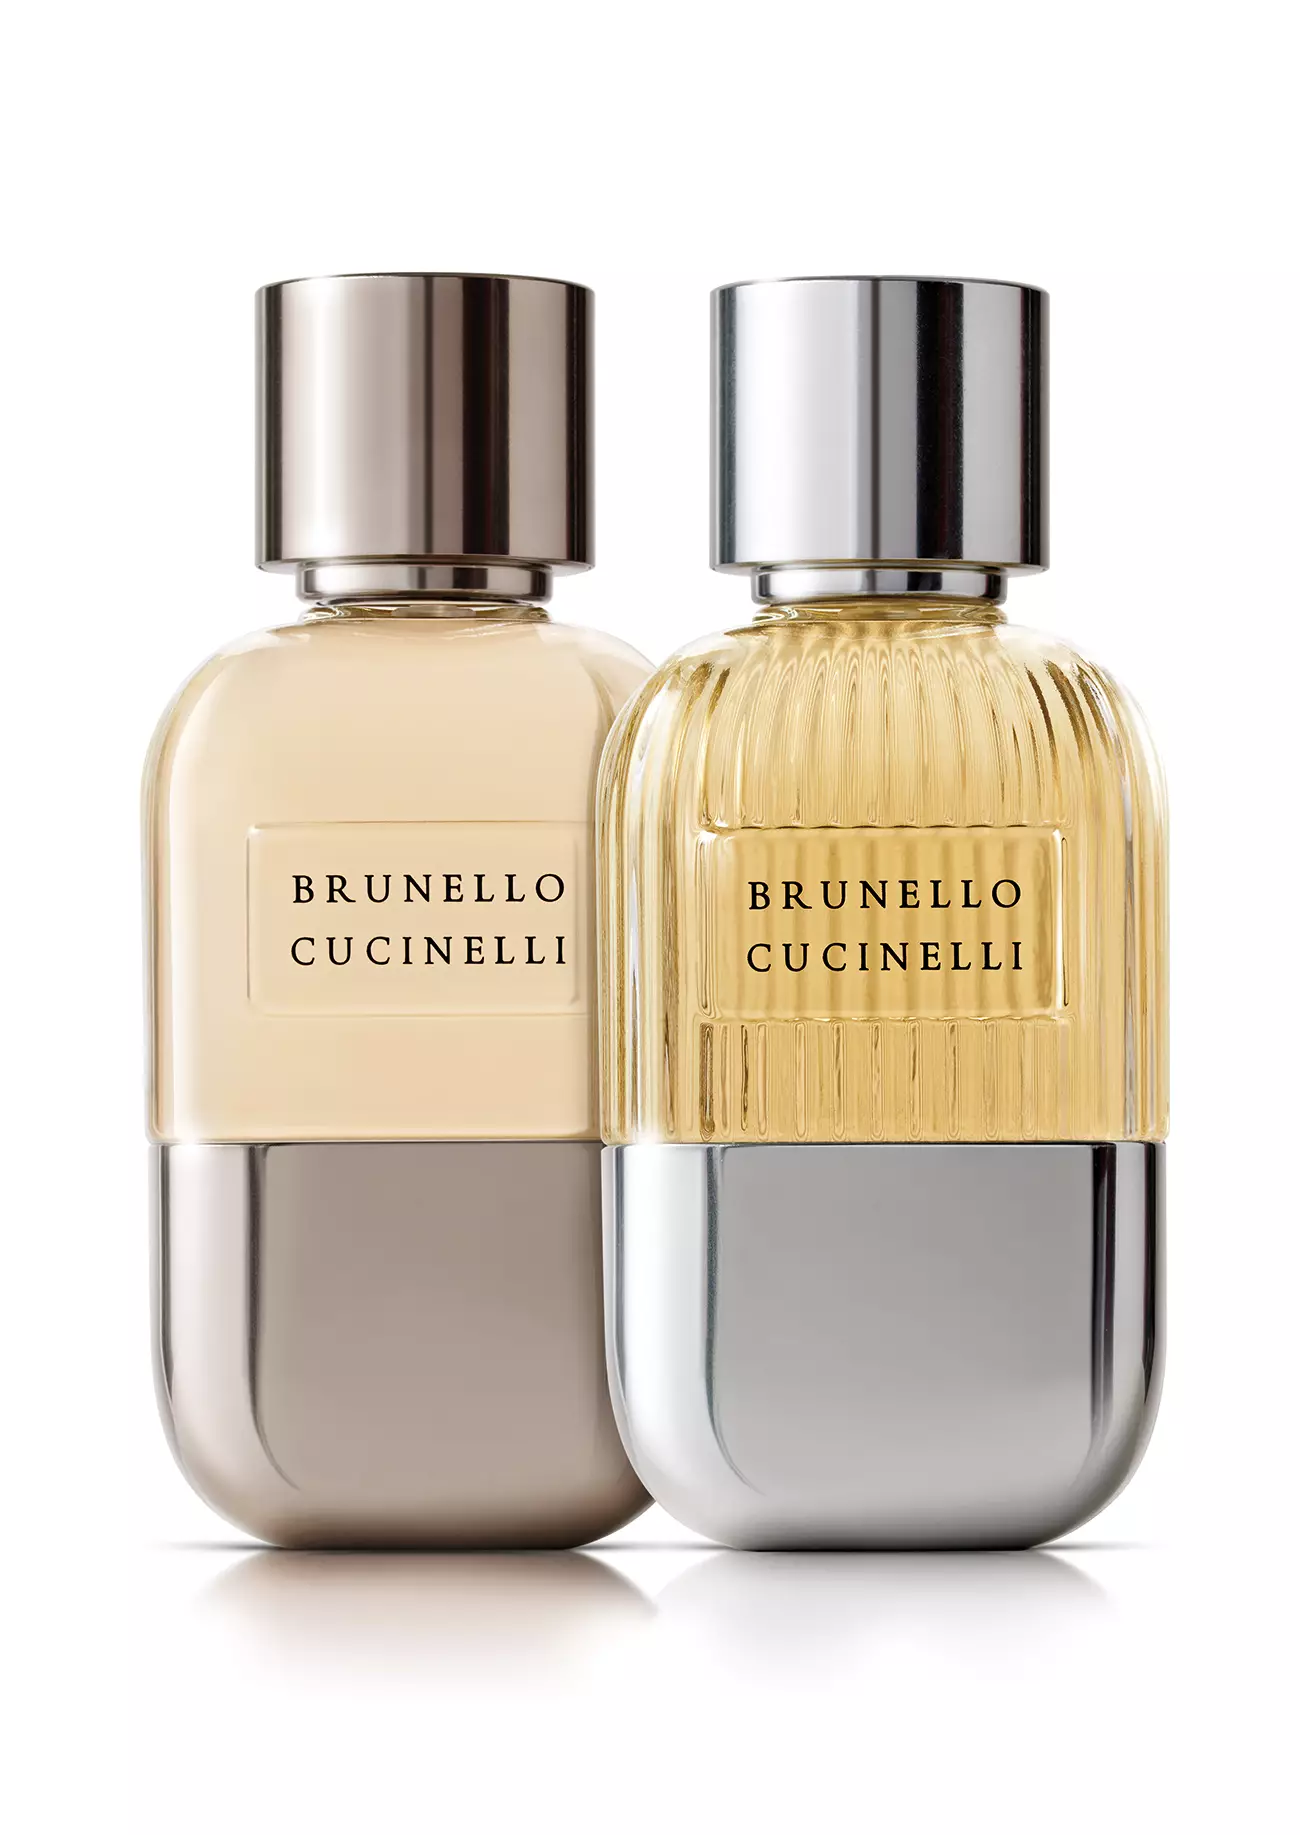 Brunello Cucinelli First fragrances Men and Women